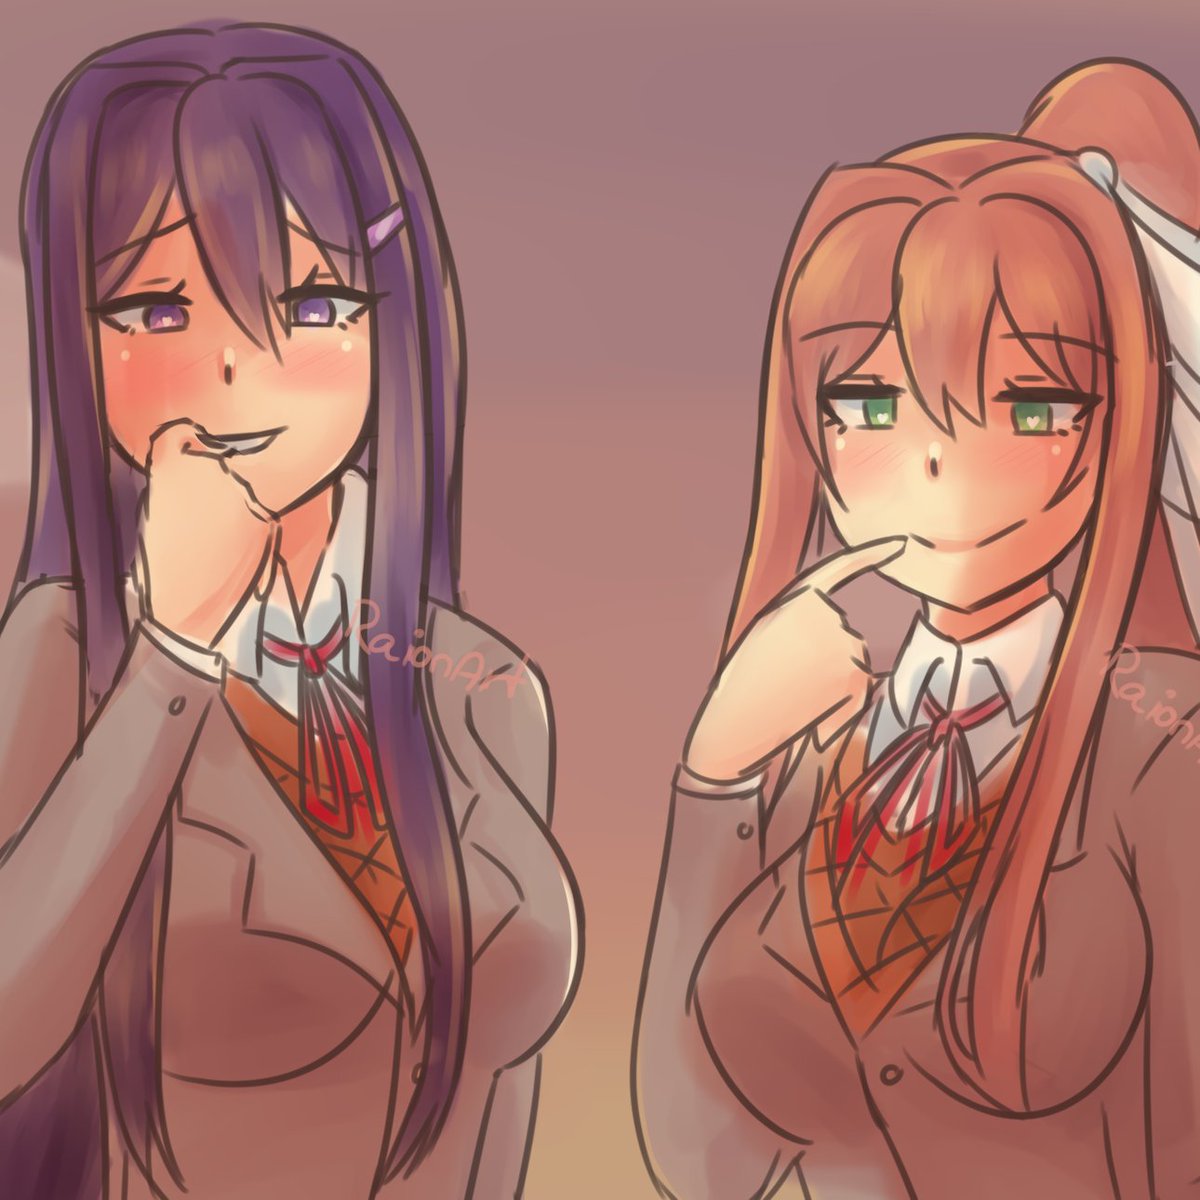 Monika joins Yuri being a yandere? 